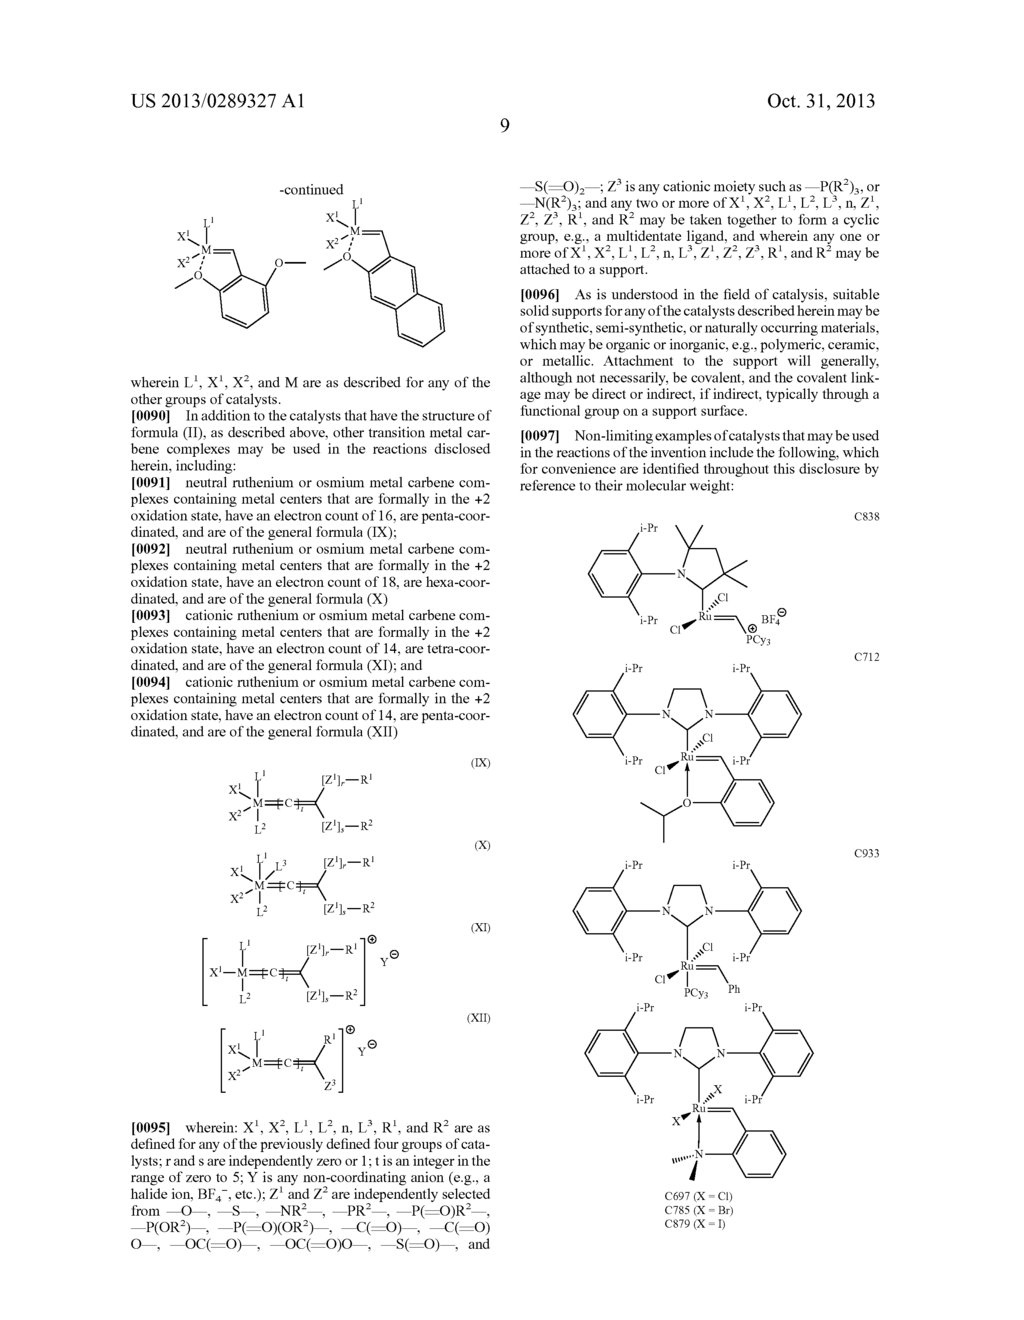 SYNTHESIS OF TERMINAL ALKENES FROM INTERNAL ALKENES AND ETHYLENE VIA     OLEFIN METATHESIS - diagram, schematic, and image 11